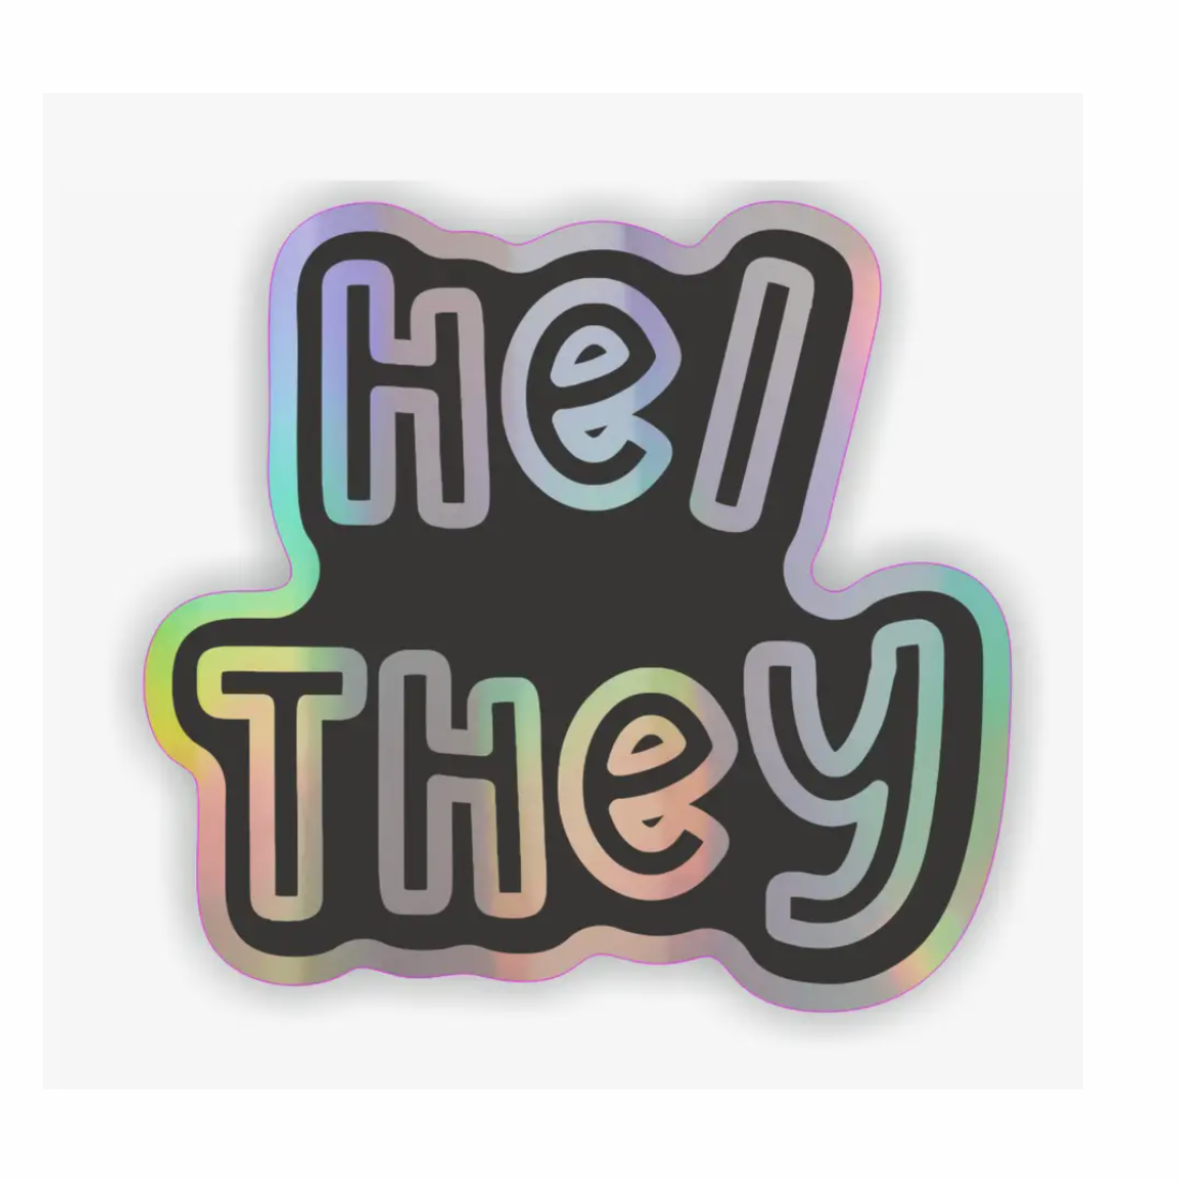 He/they holographic vinyl pronoun sticker